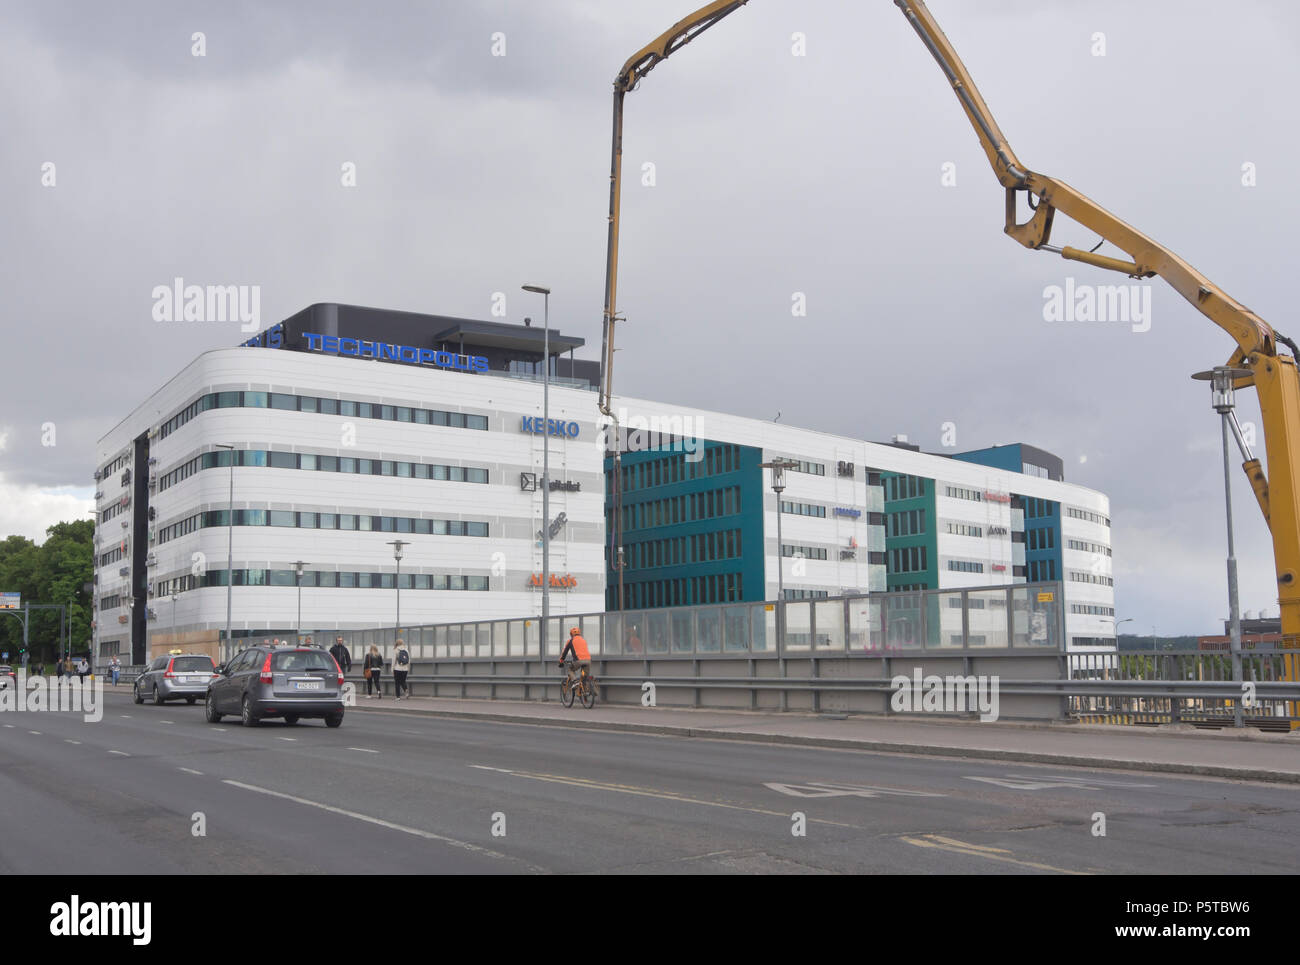 Technopolis building -Fotos und -Bildmaterial in hoher Auflösung – Alamy